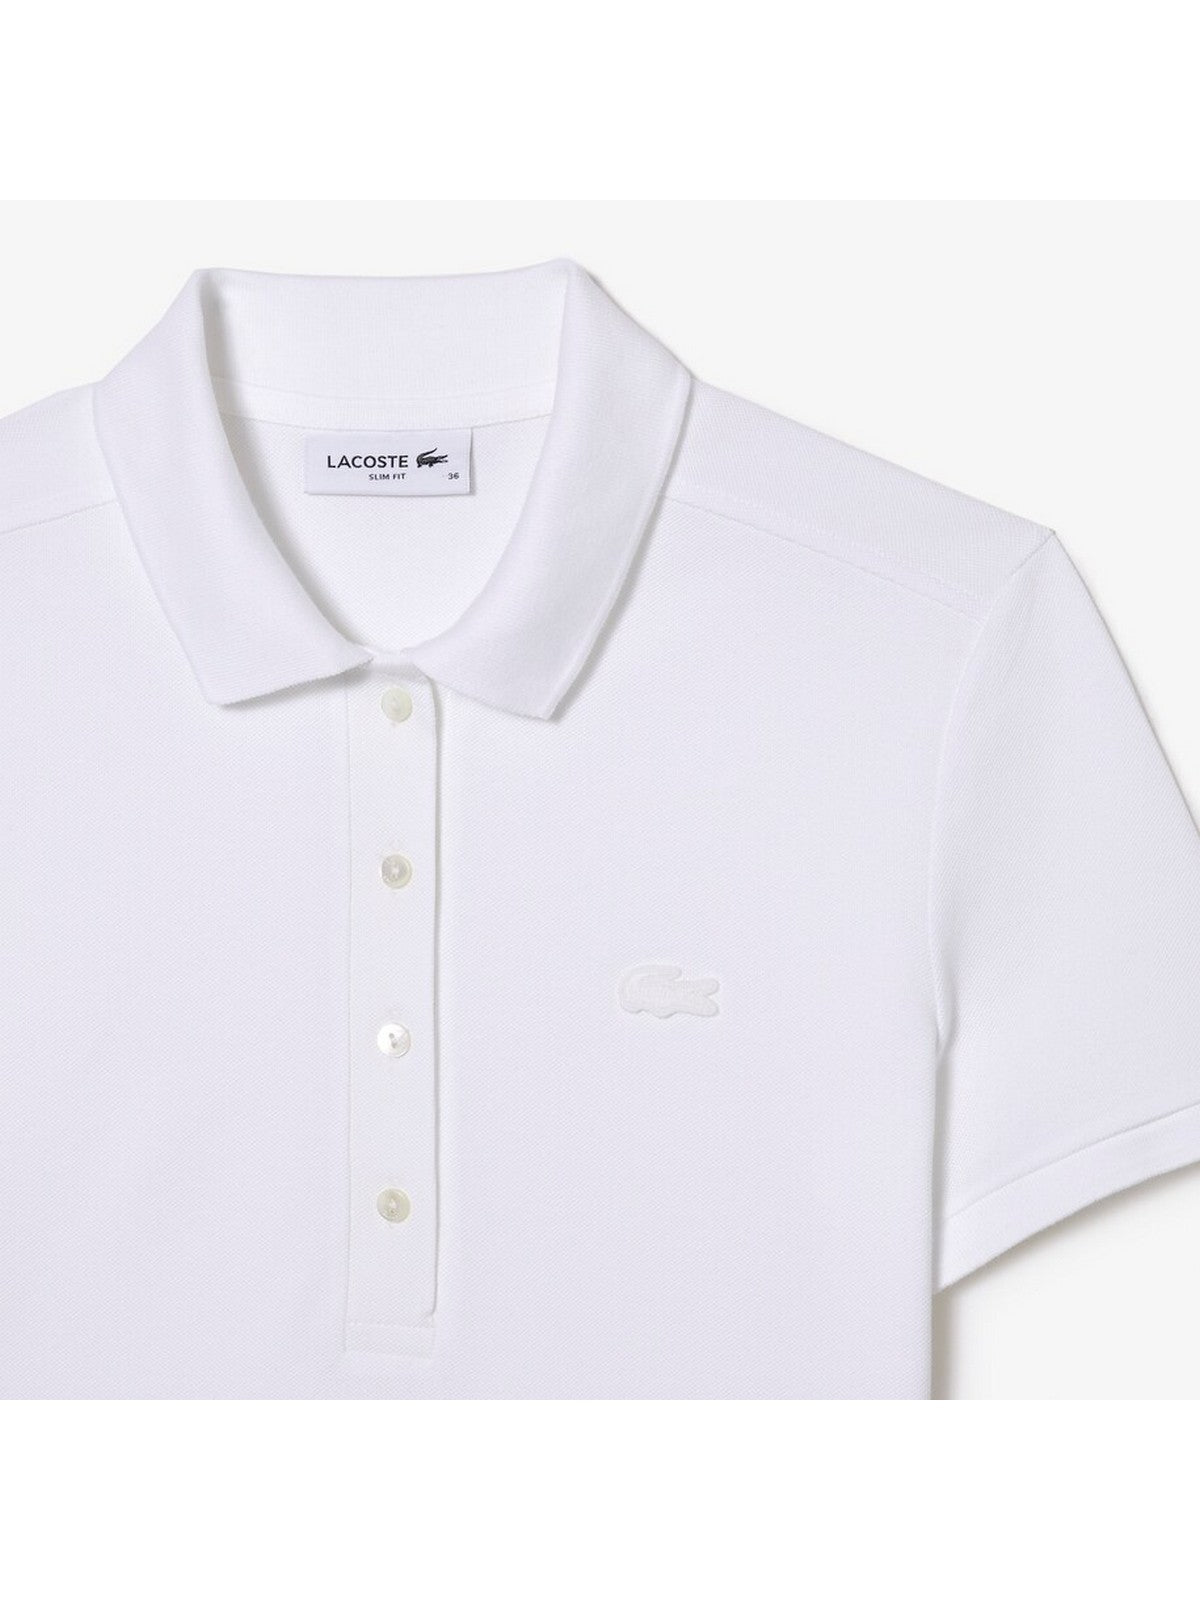 LACOSTE T-Shirt e Polo Donna  PF5462 001 Bianco